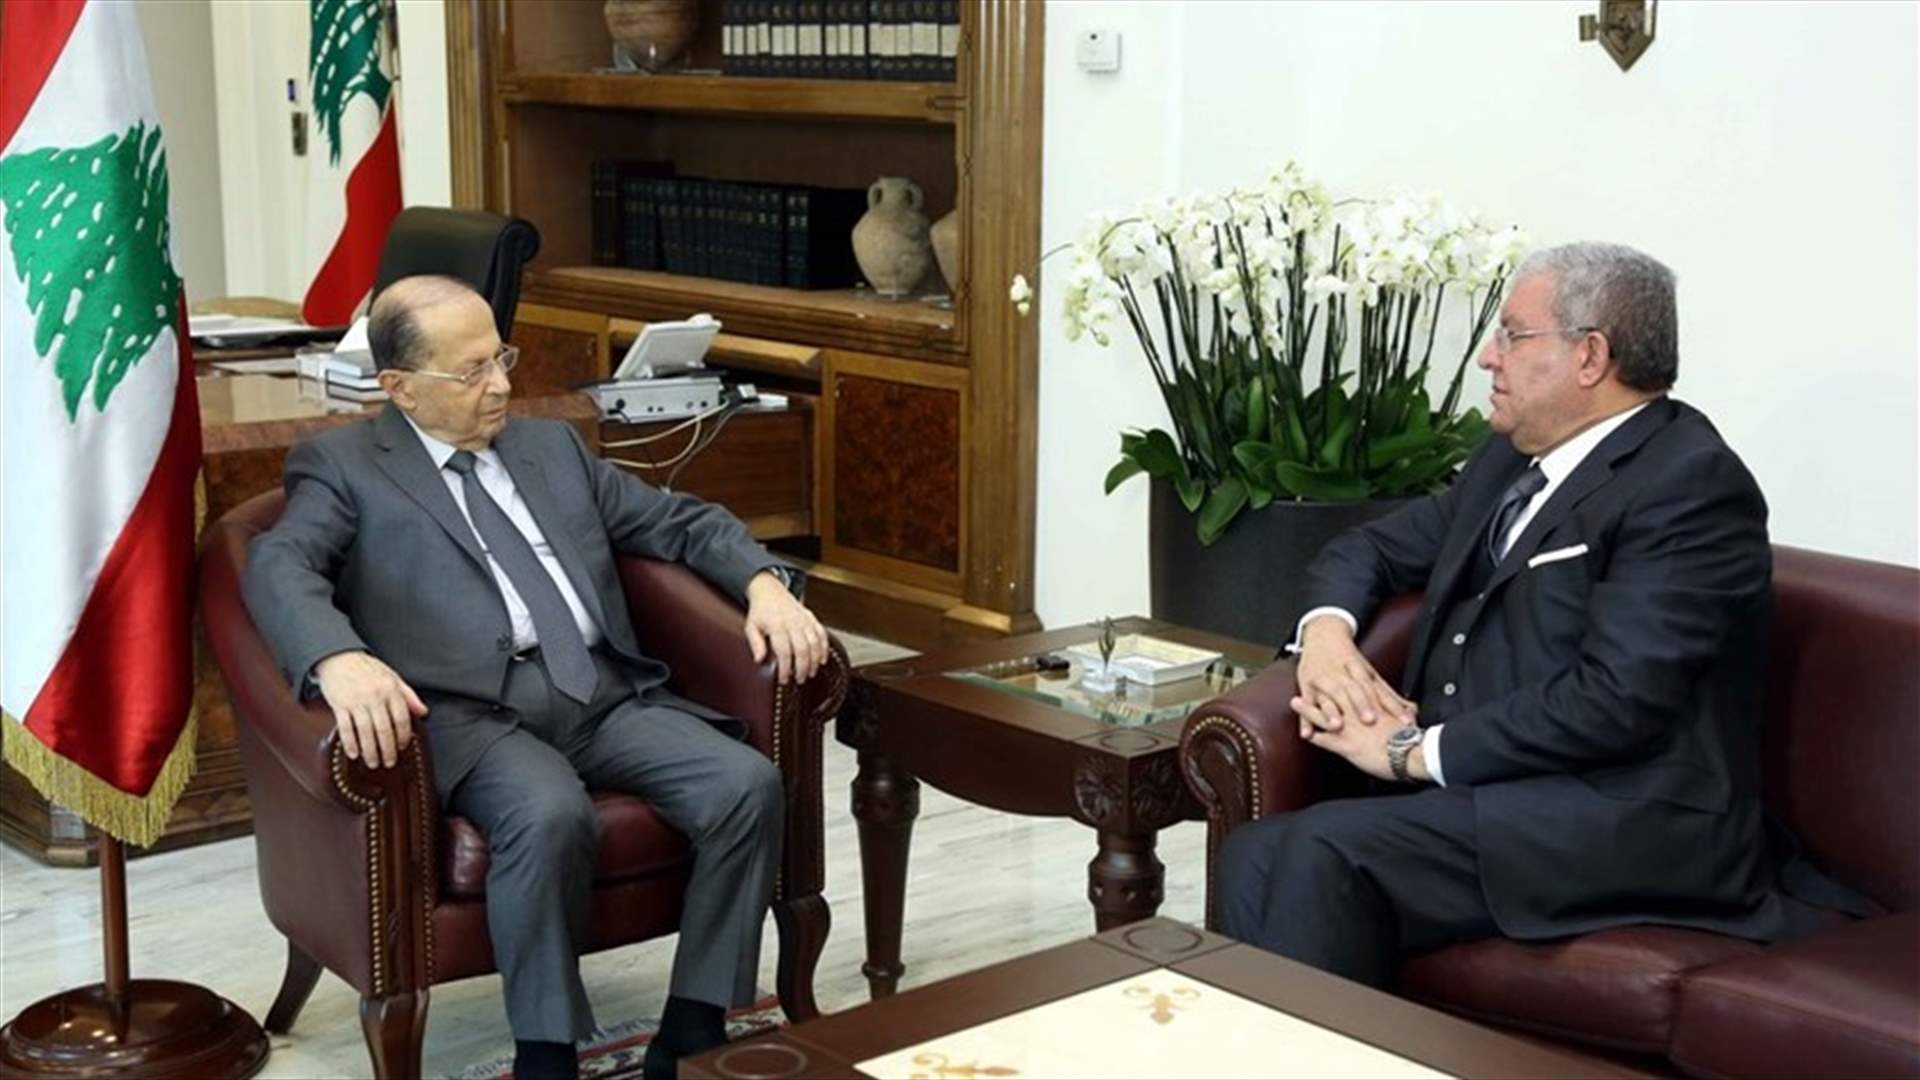 President Aoun meets with Minister al-Mashnouq